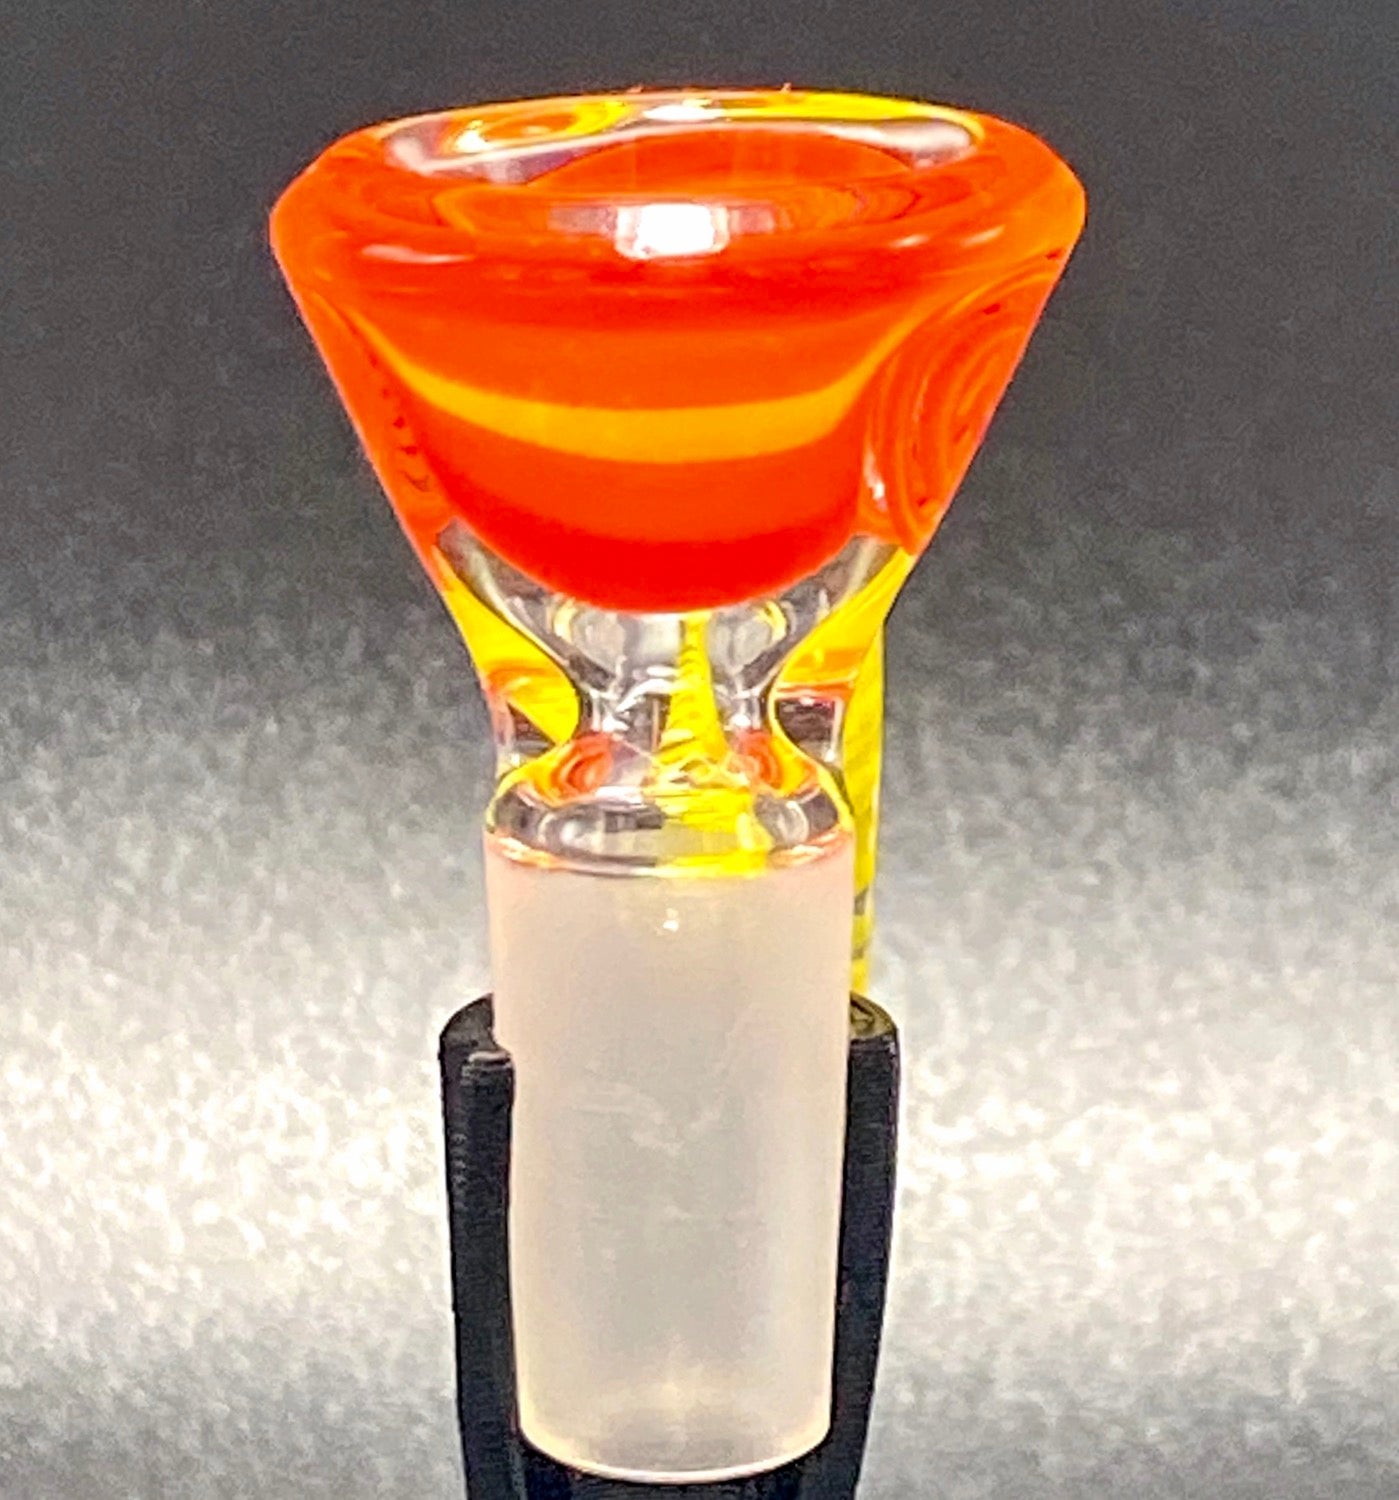 JULIO GLASS WORKED 14mm Single Hole SLIDE - TheSmokeyMcPotz Collection 